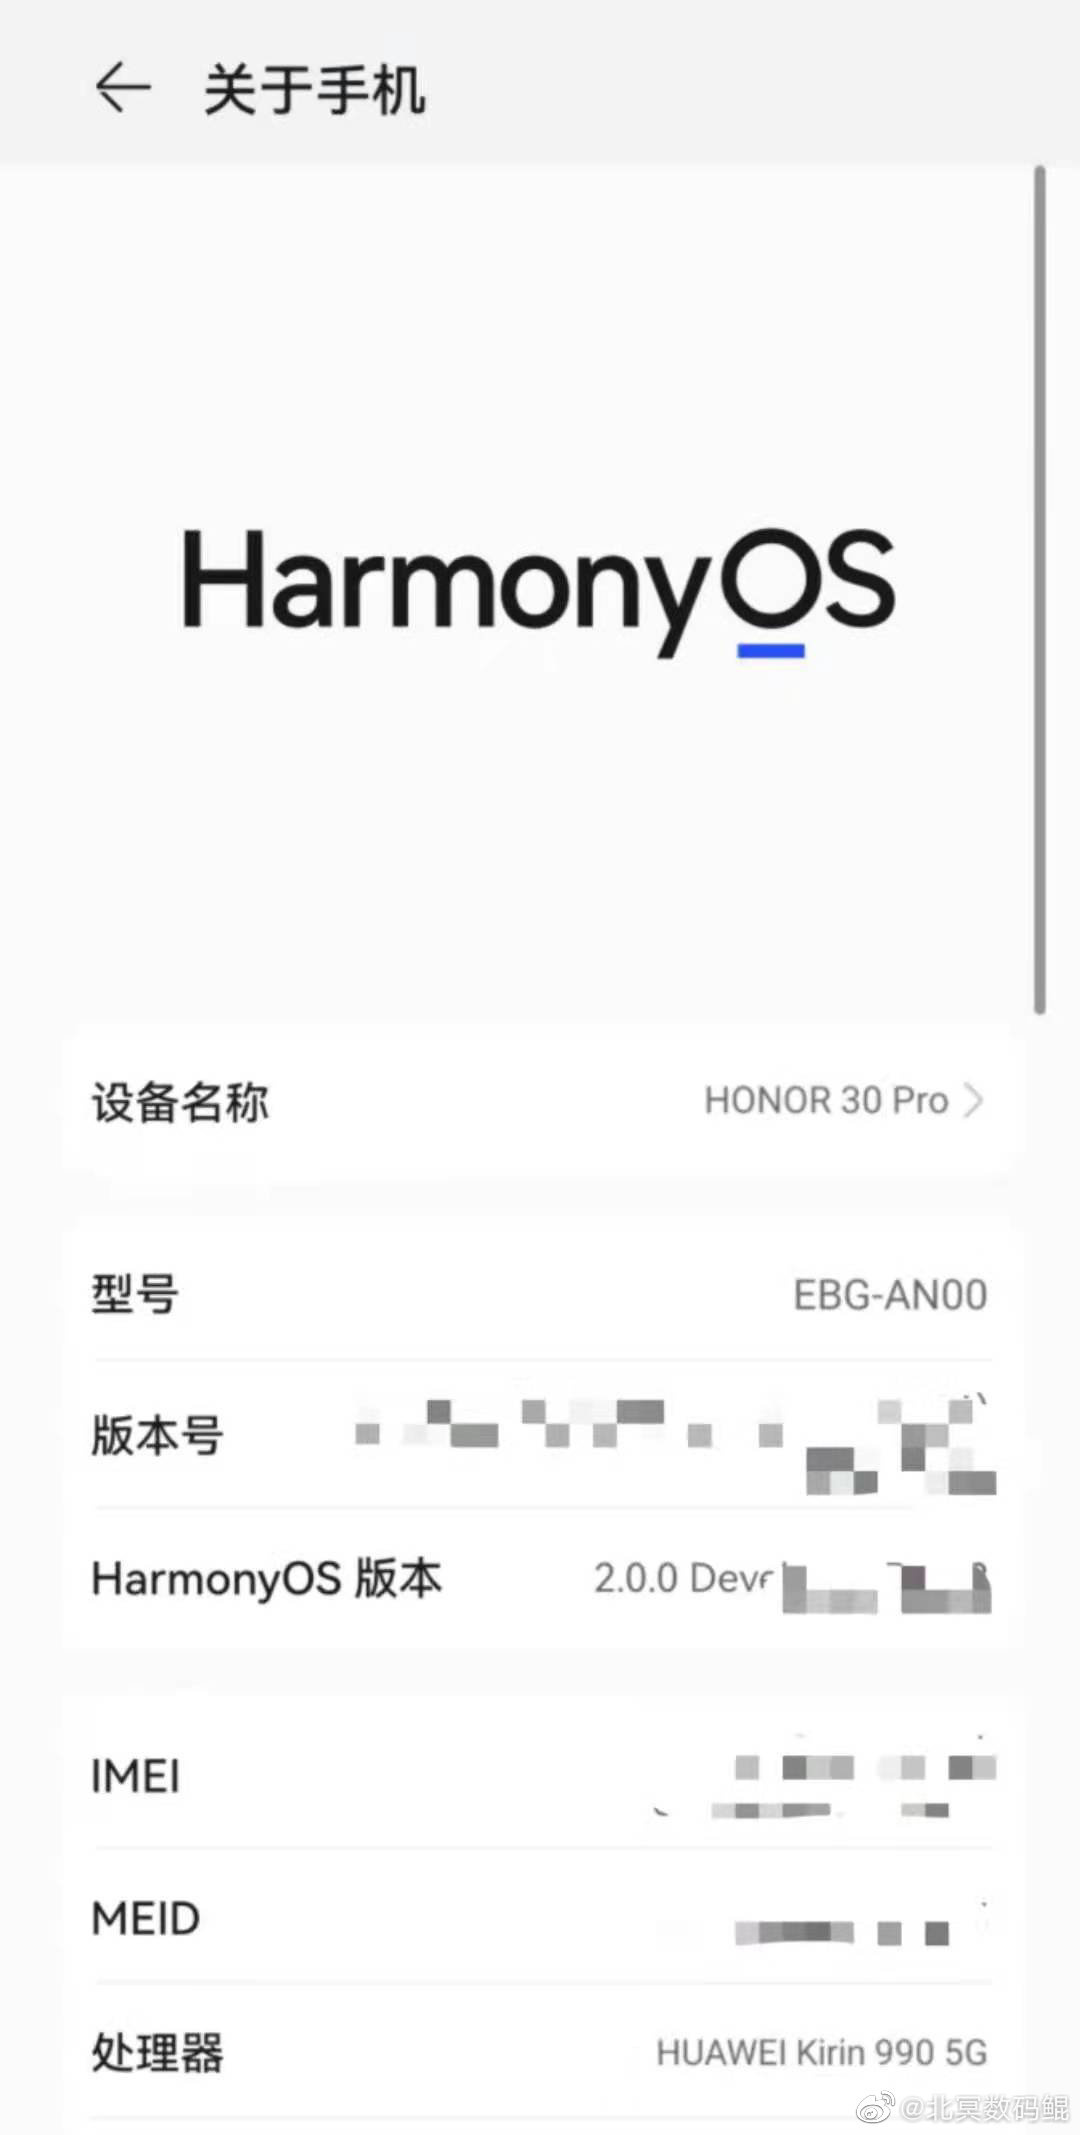 Honor 30 Pro HarmonyOS 2.0 beta testing